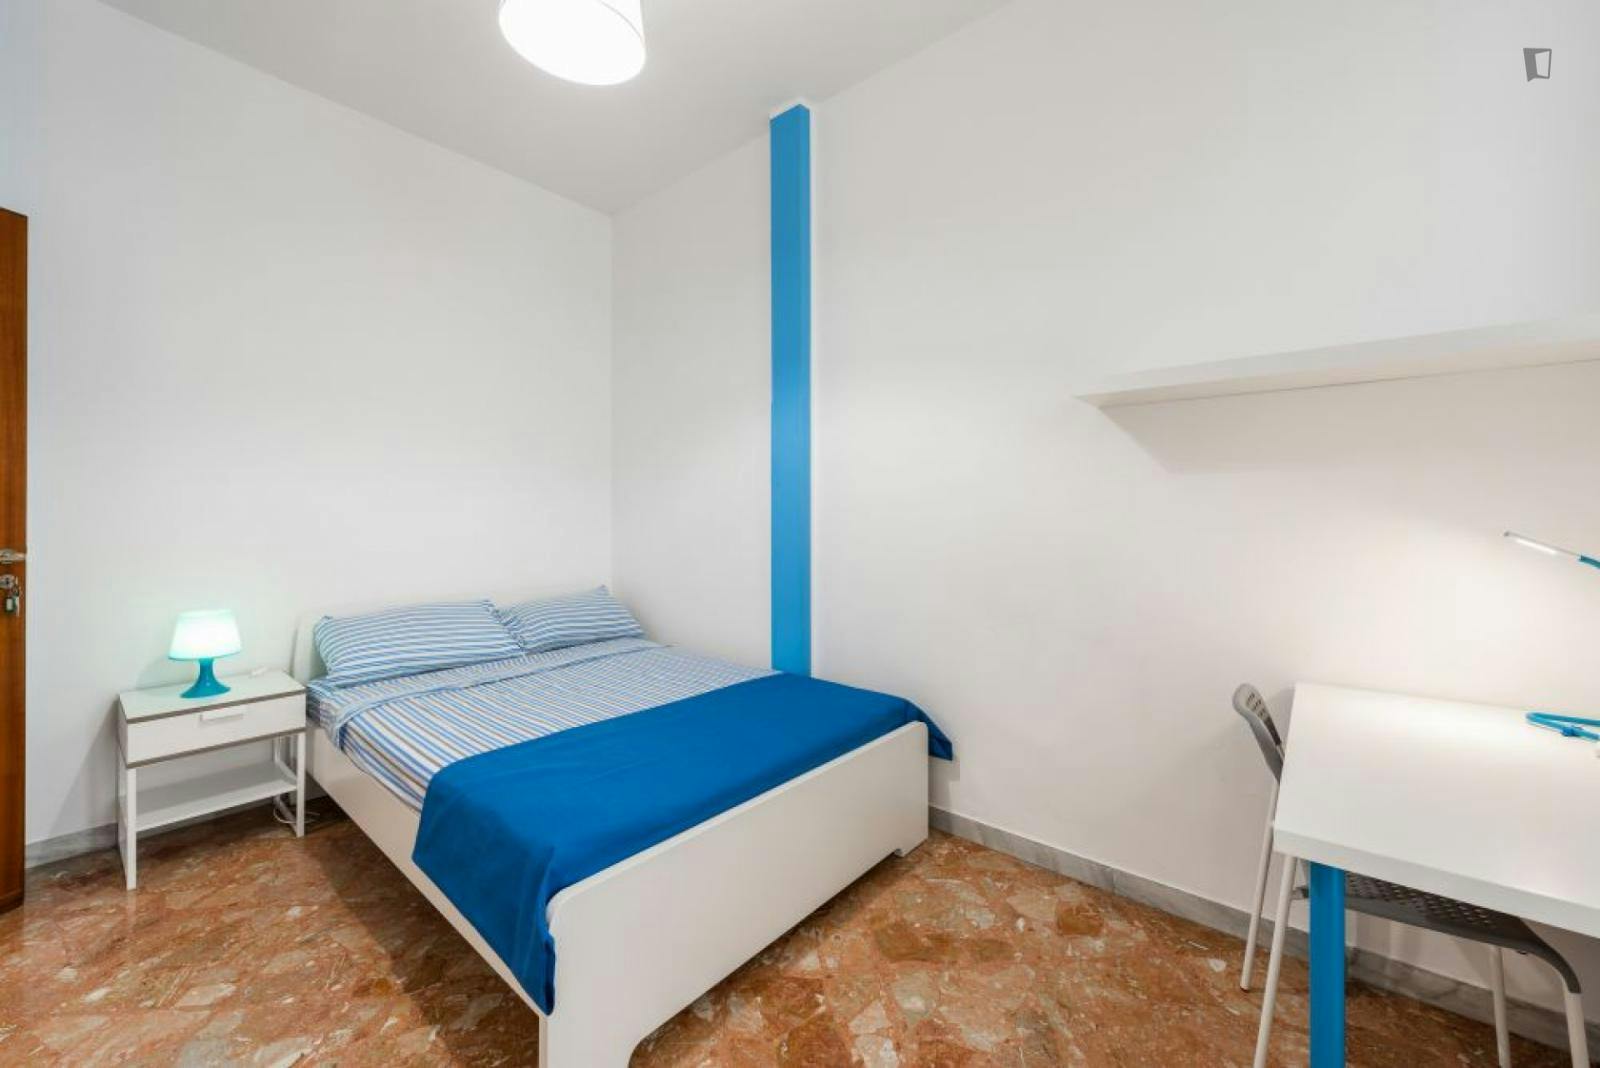 Splendid double bedroom near the Quintino Sella metro